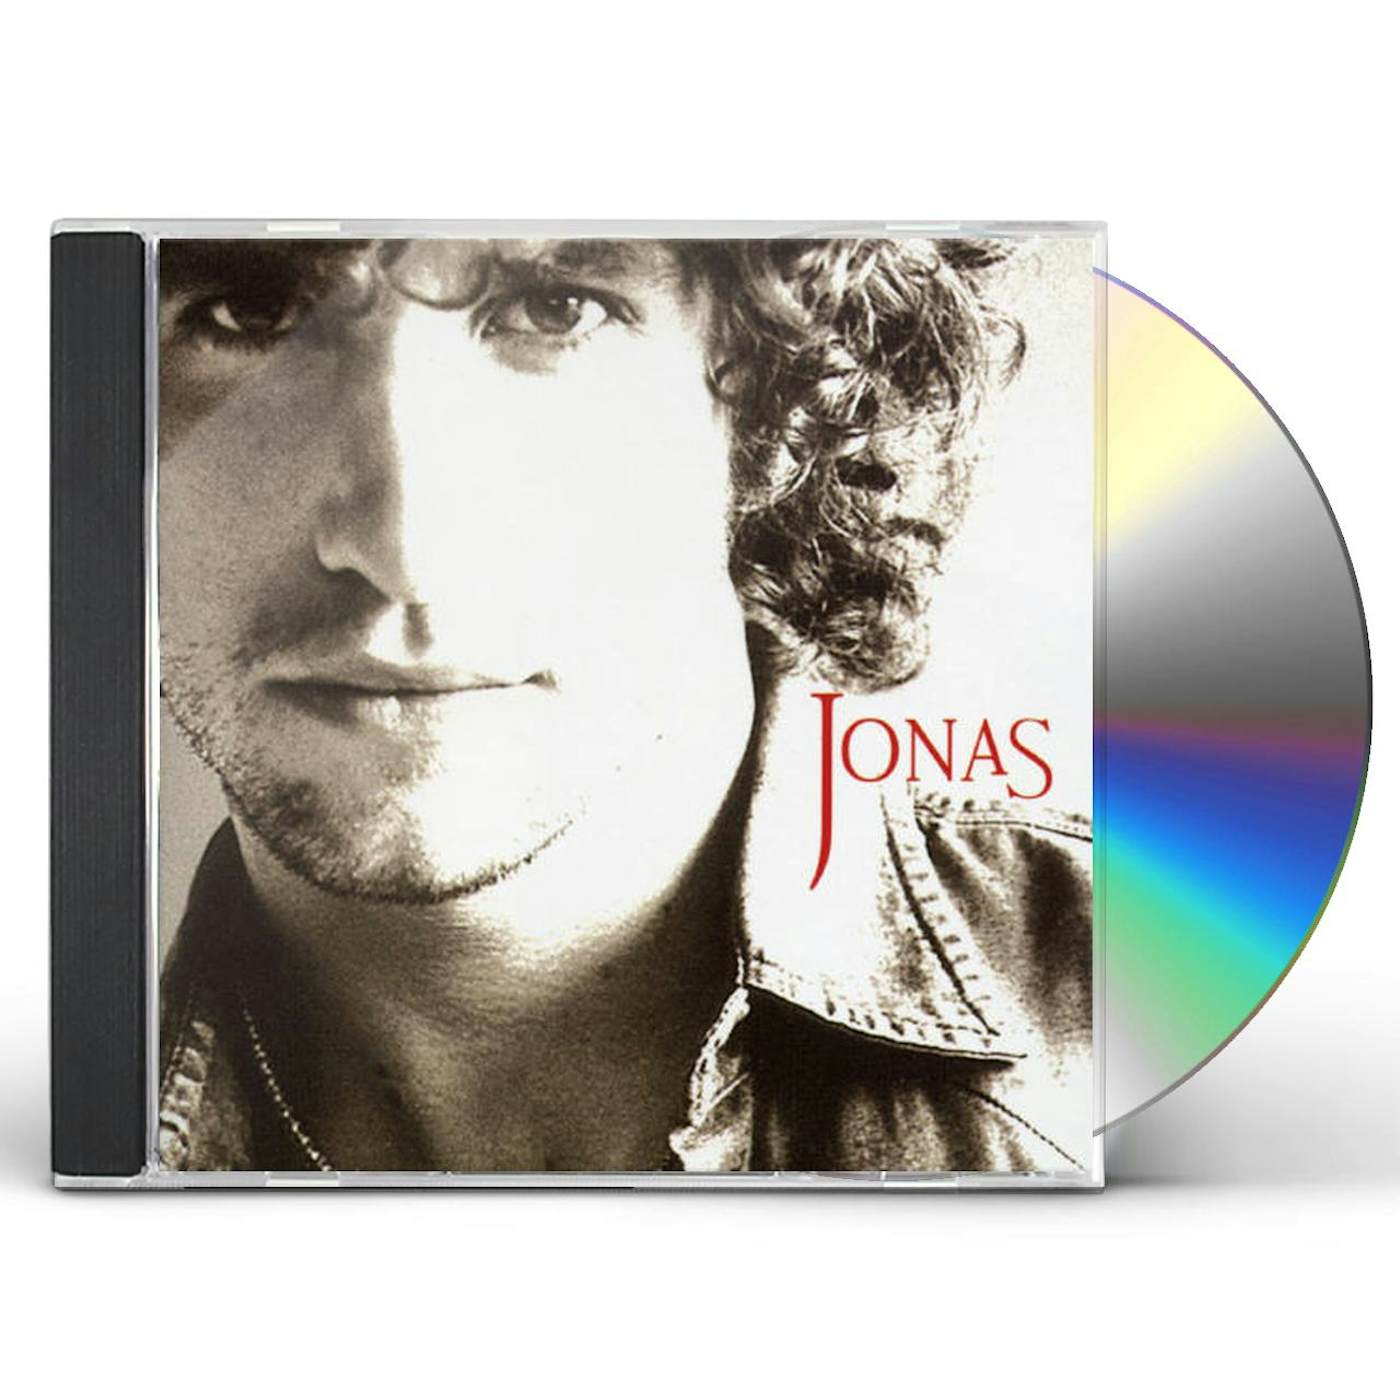 JONAS CD